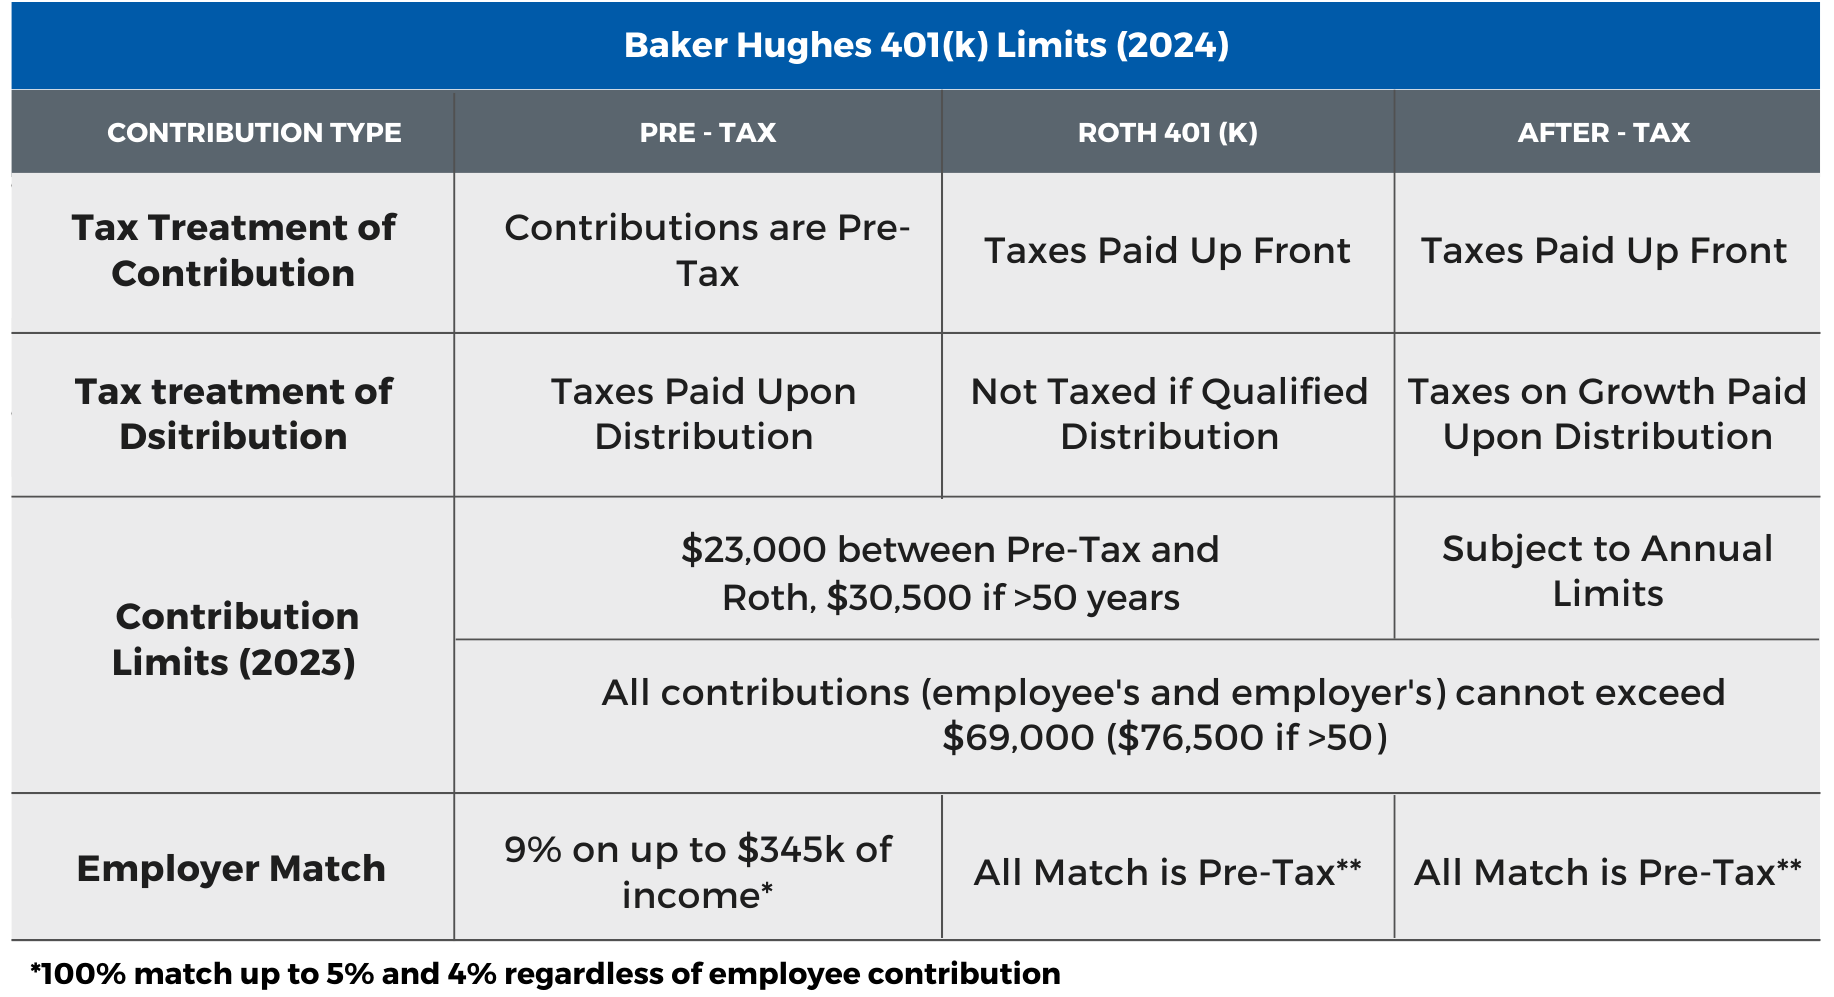 Baker Hughes 401(k) contribution limits